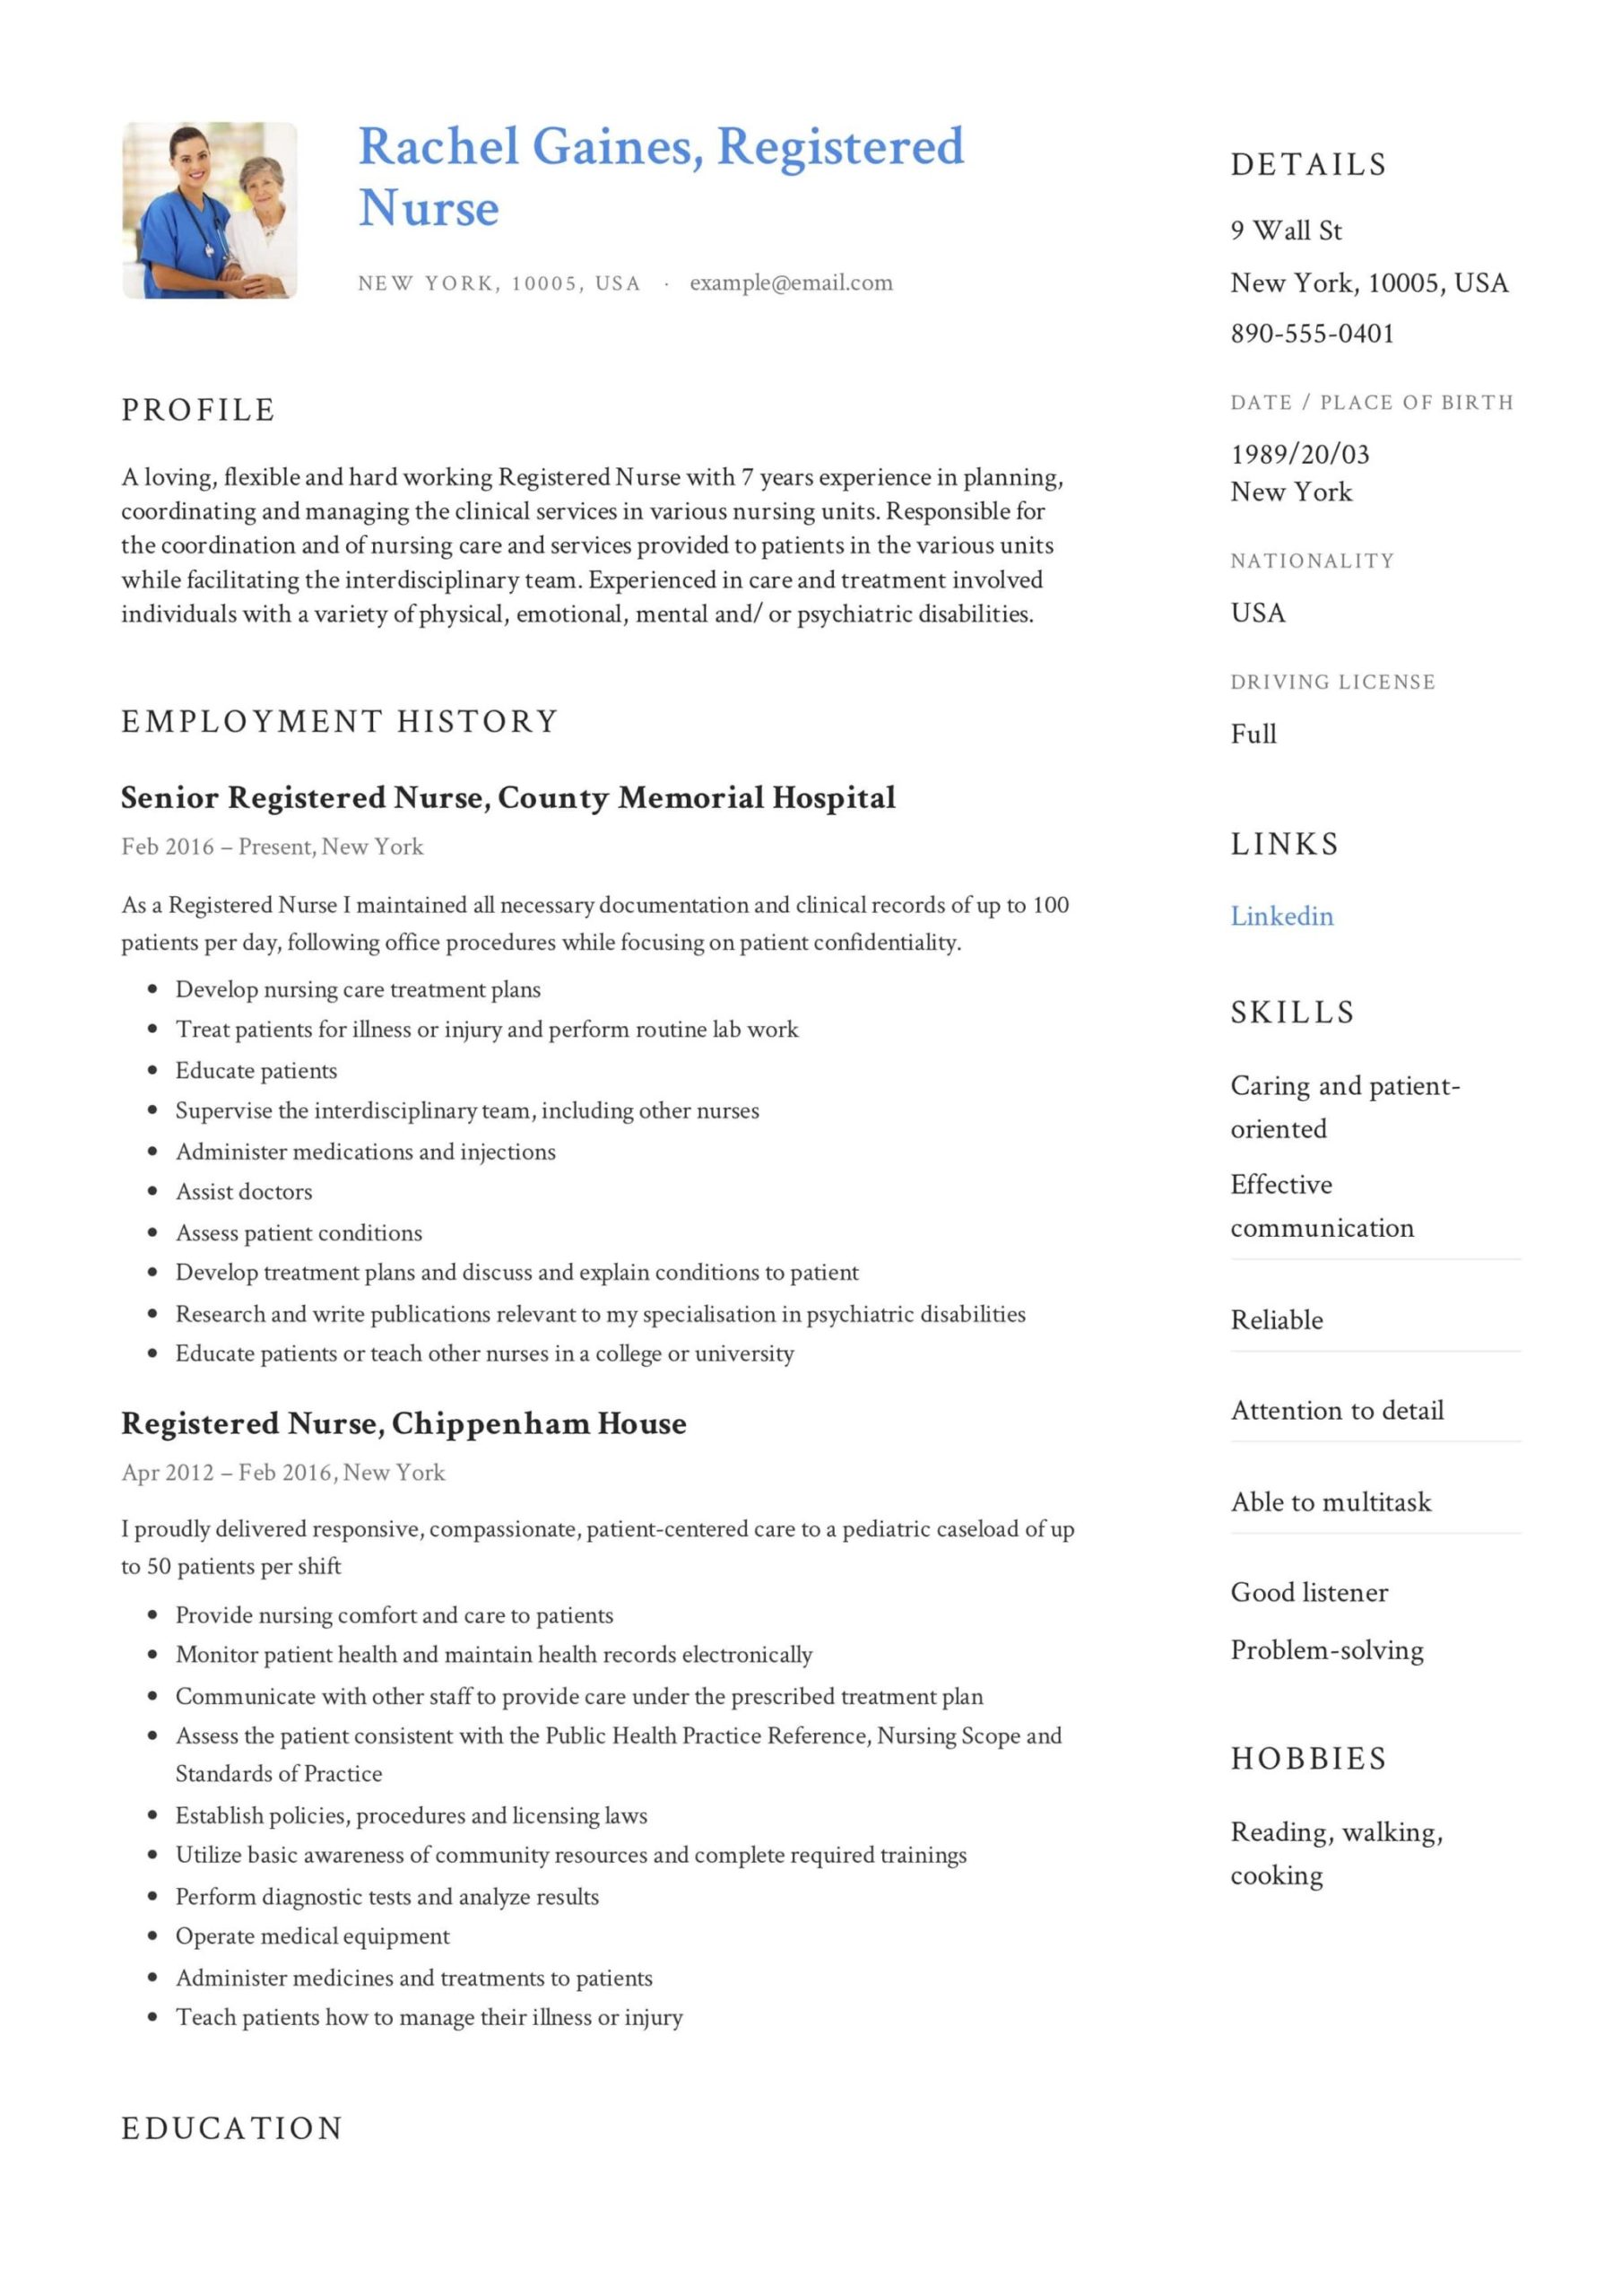 Free Resume Samples for Registered Nurse Registered Nurse Resume Sample & Writing Guide